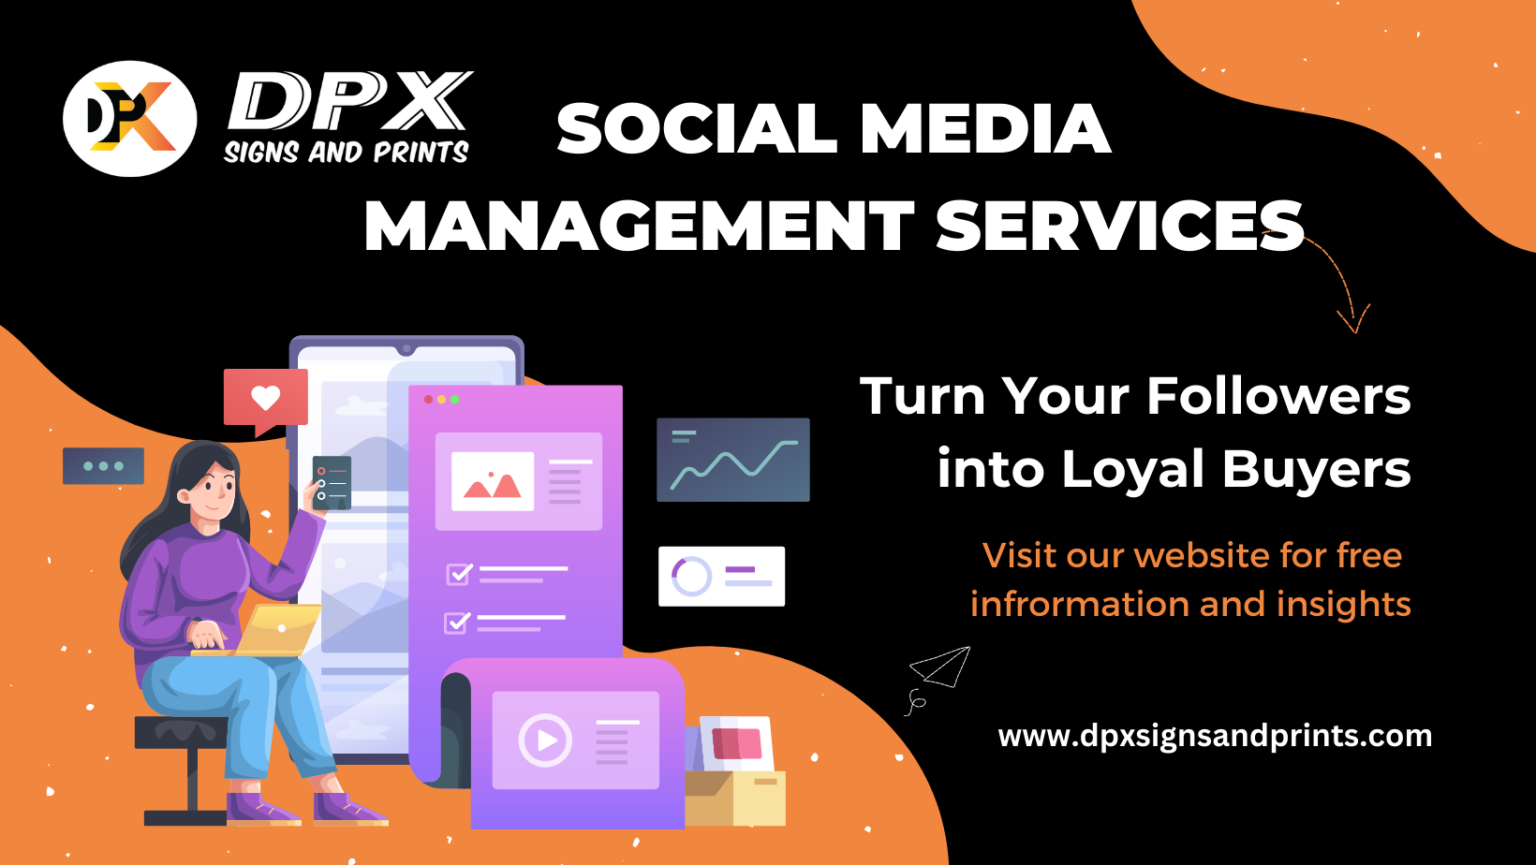 dpx_social_media_management